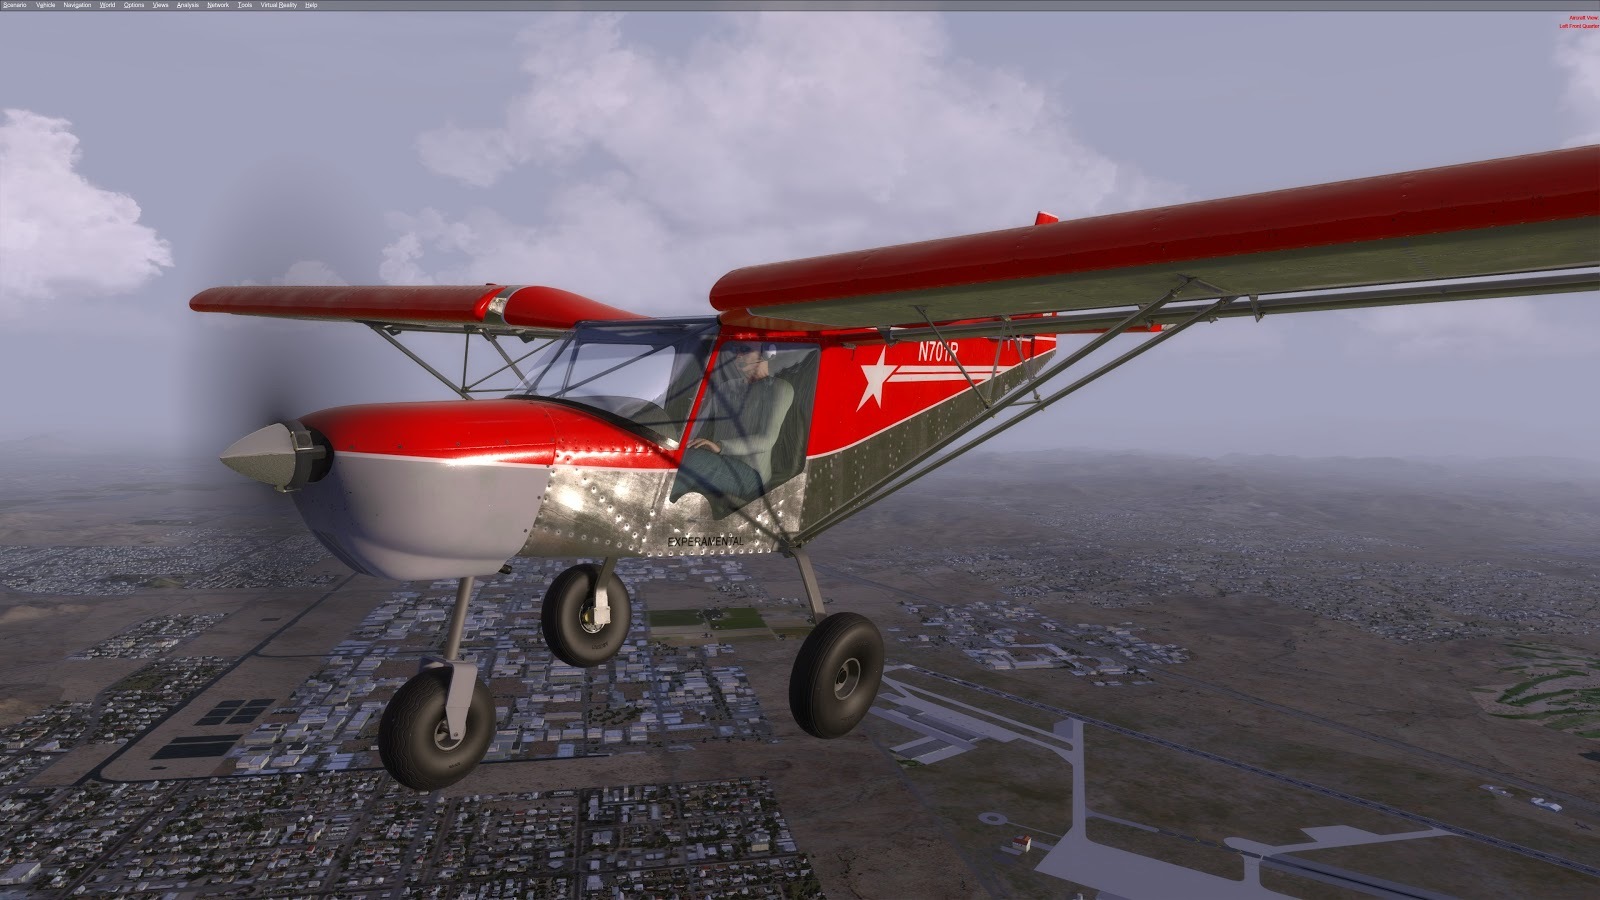 ch 701 flight manual torrent